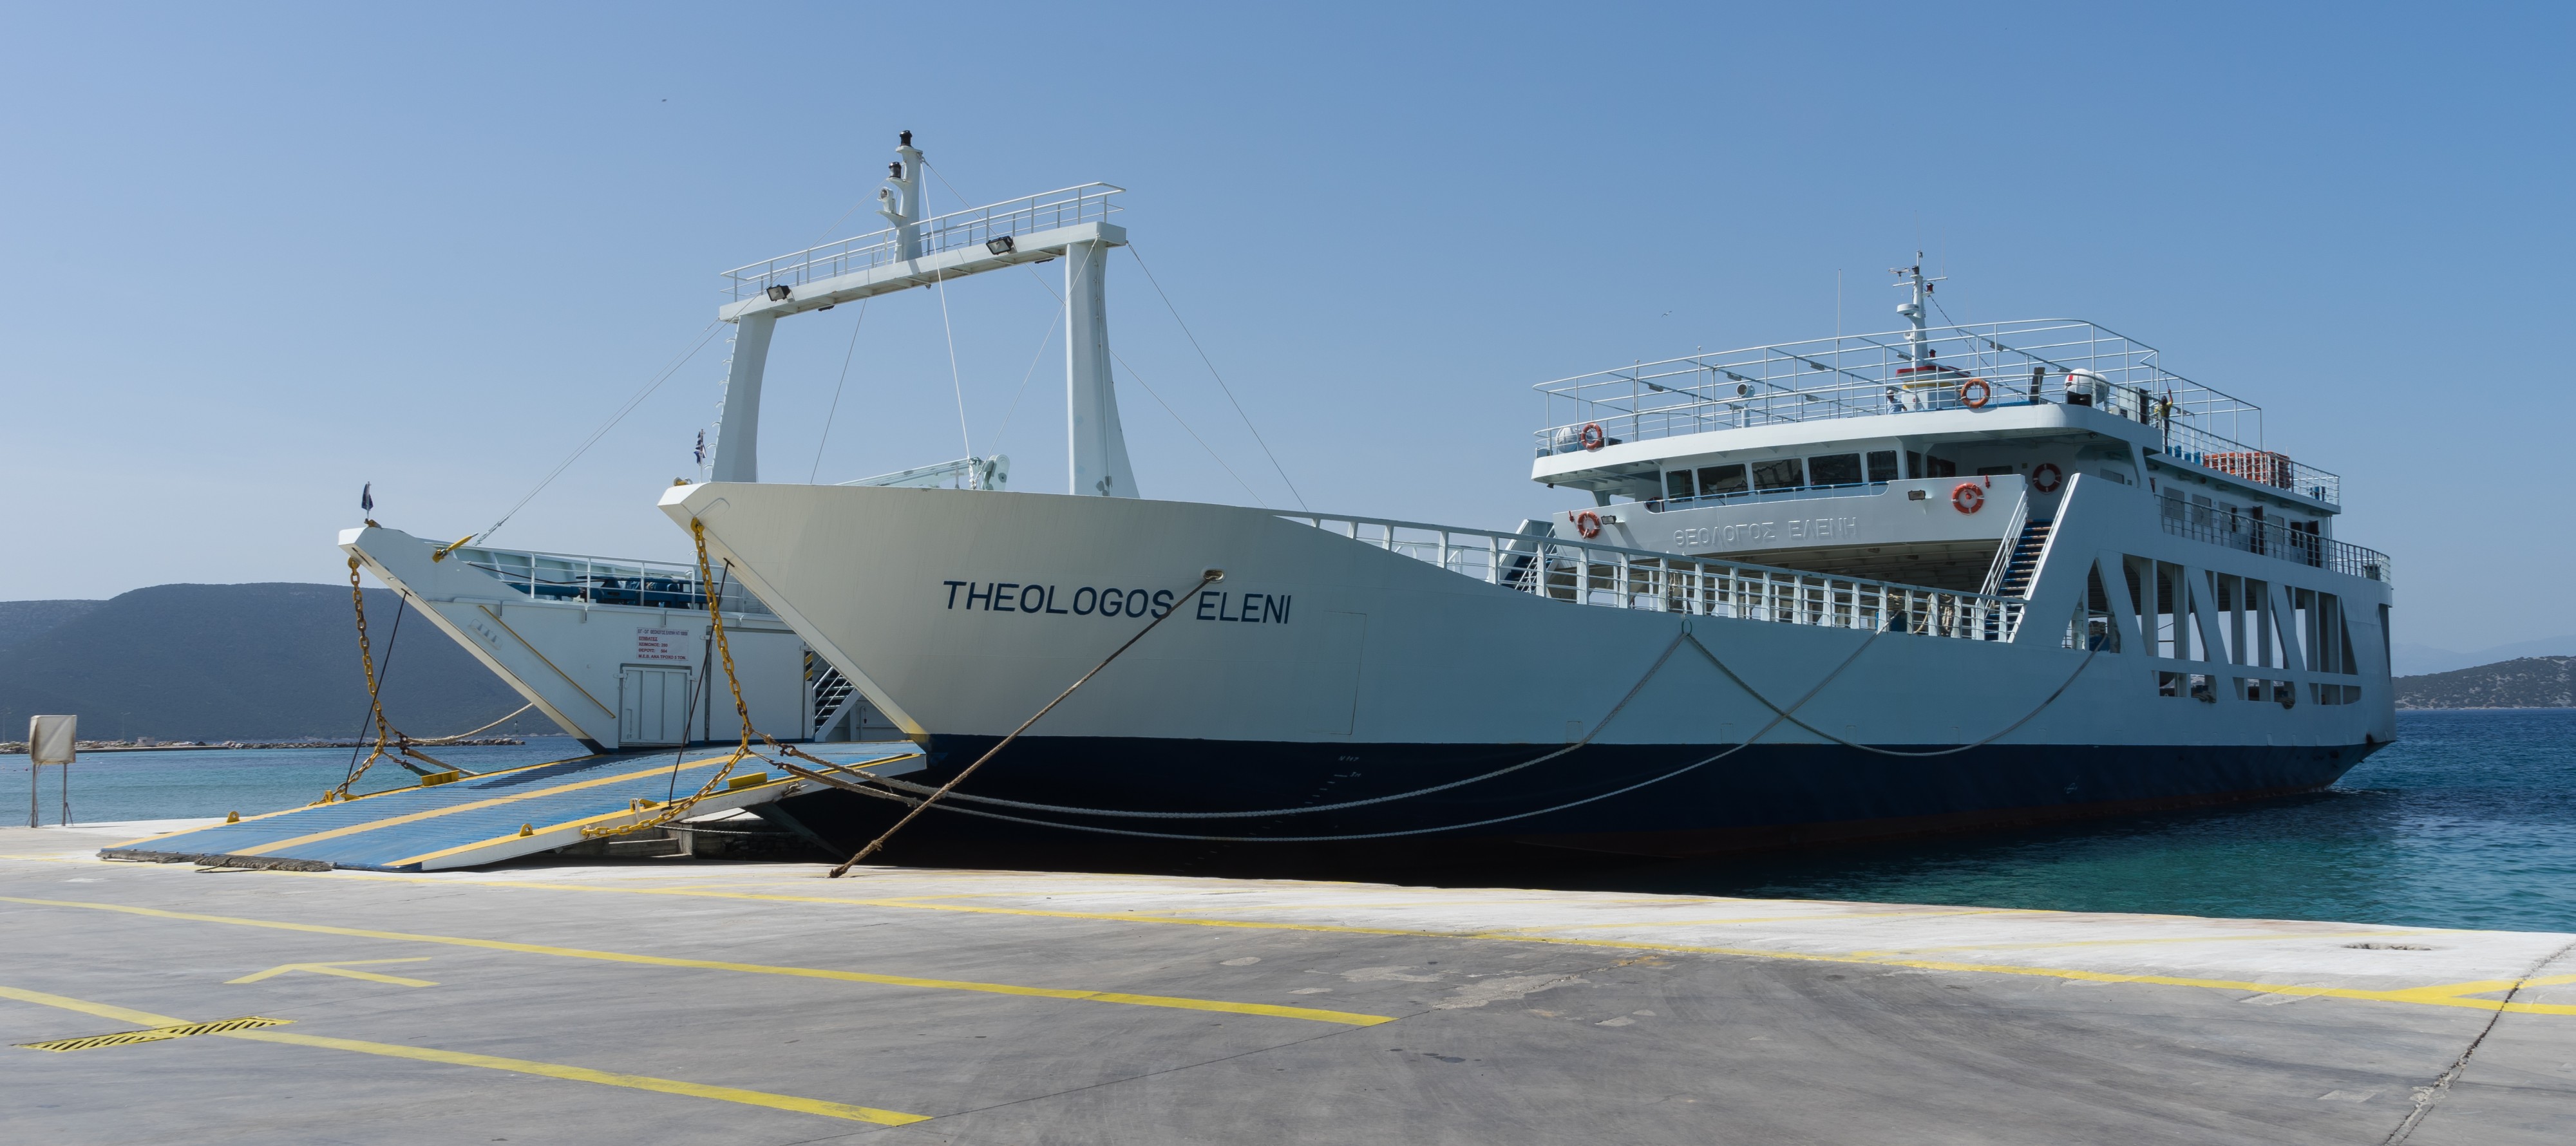 Theologos Eleni ferry Eretria Greece